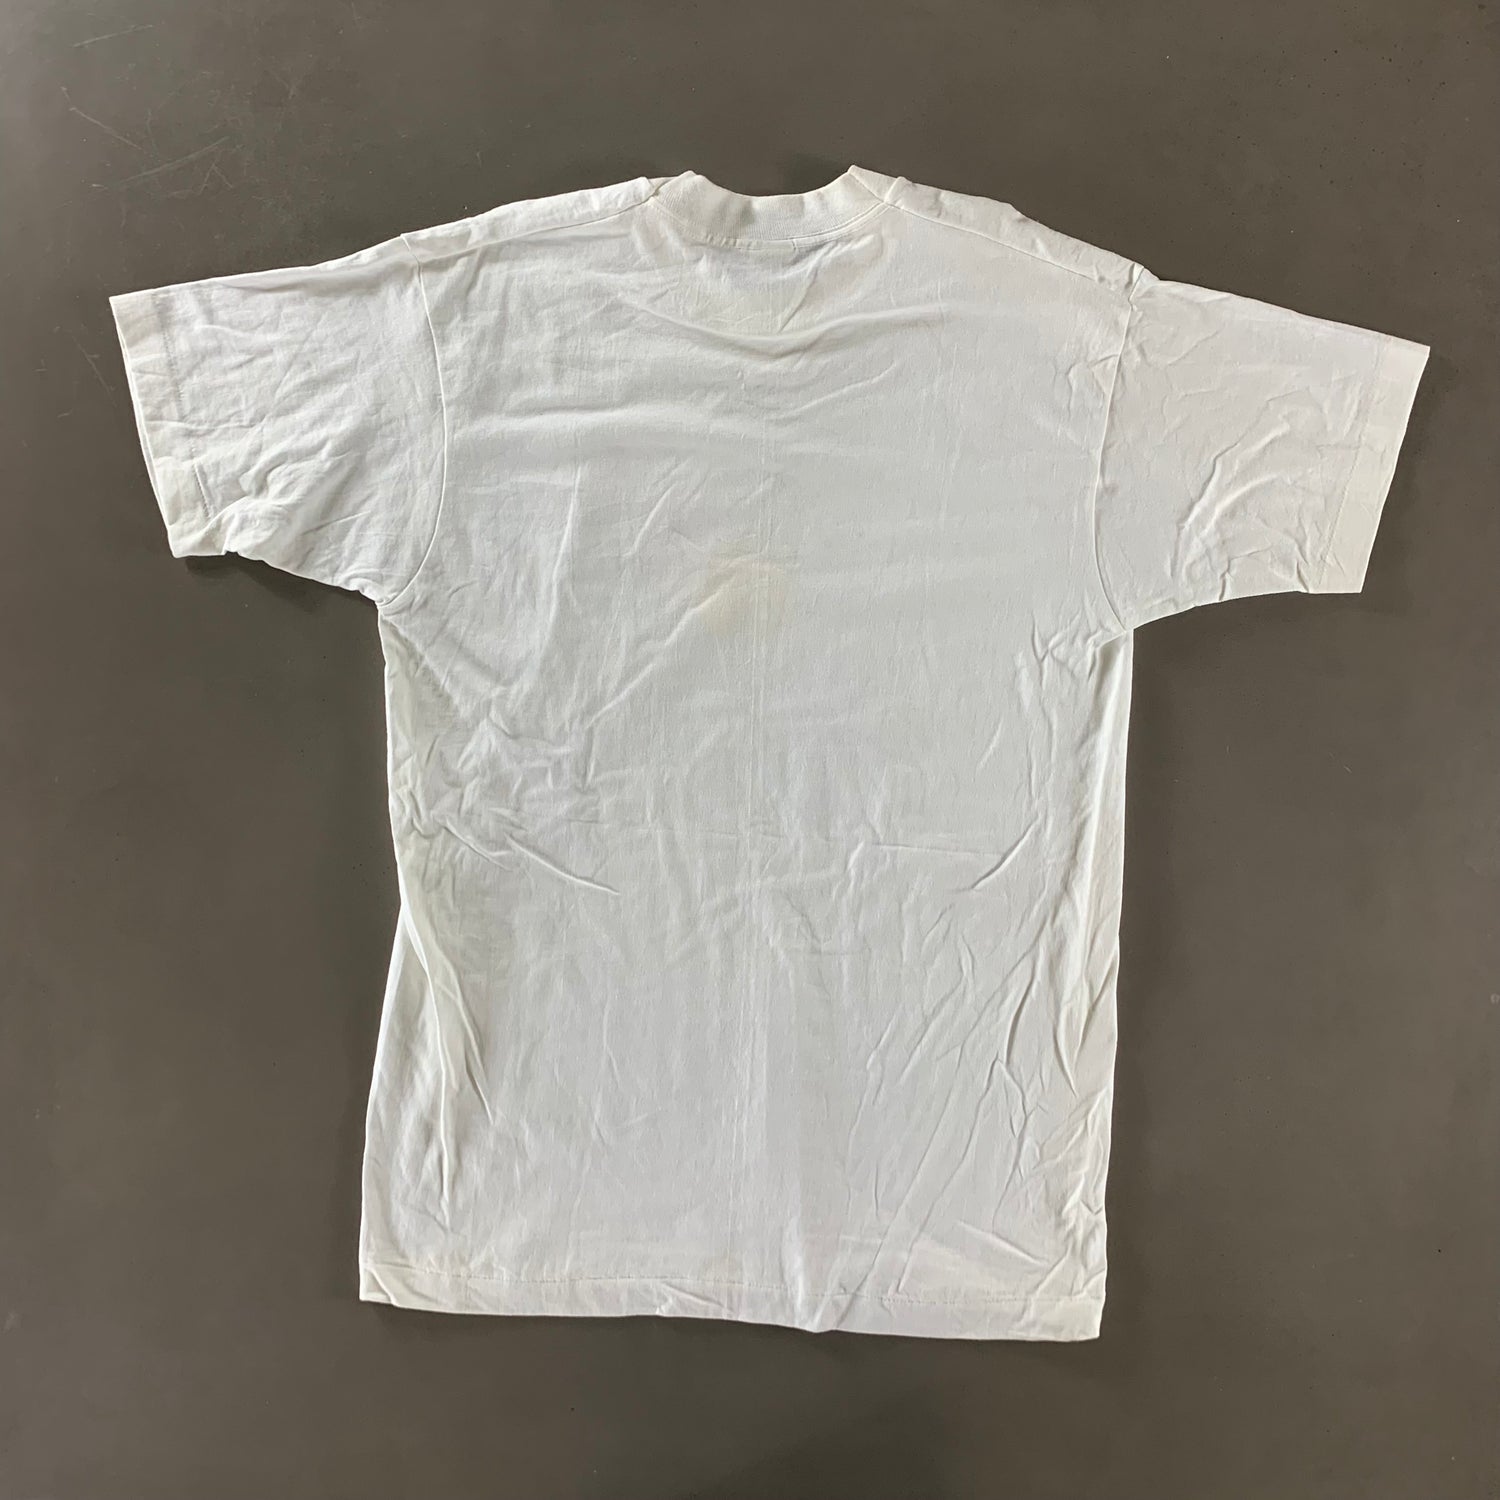 Vintage 1990s St. Thomas T-shirt size Large